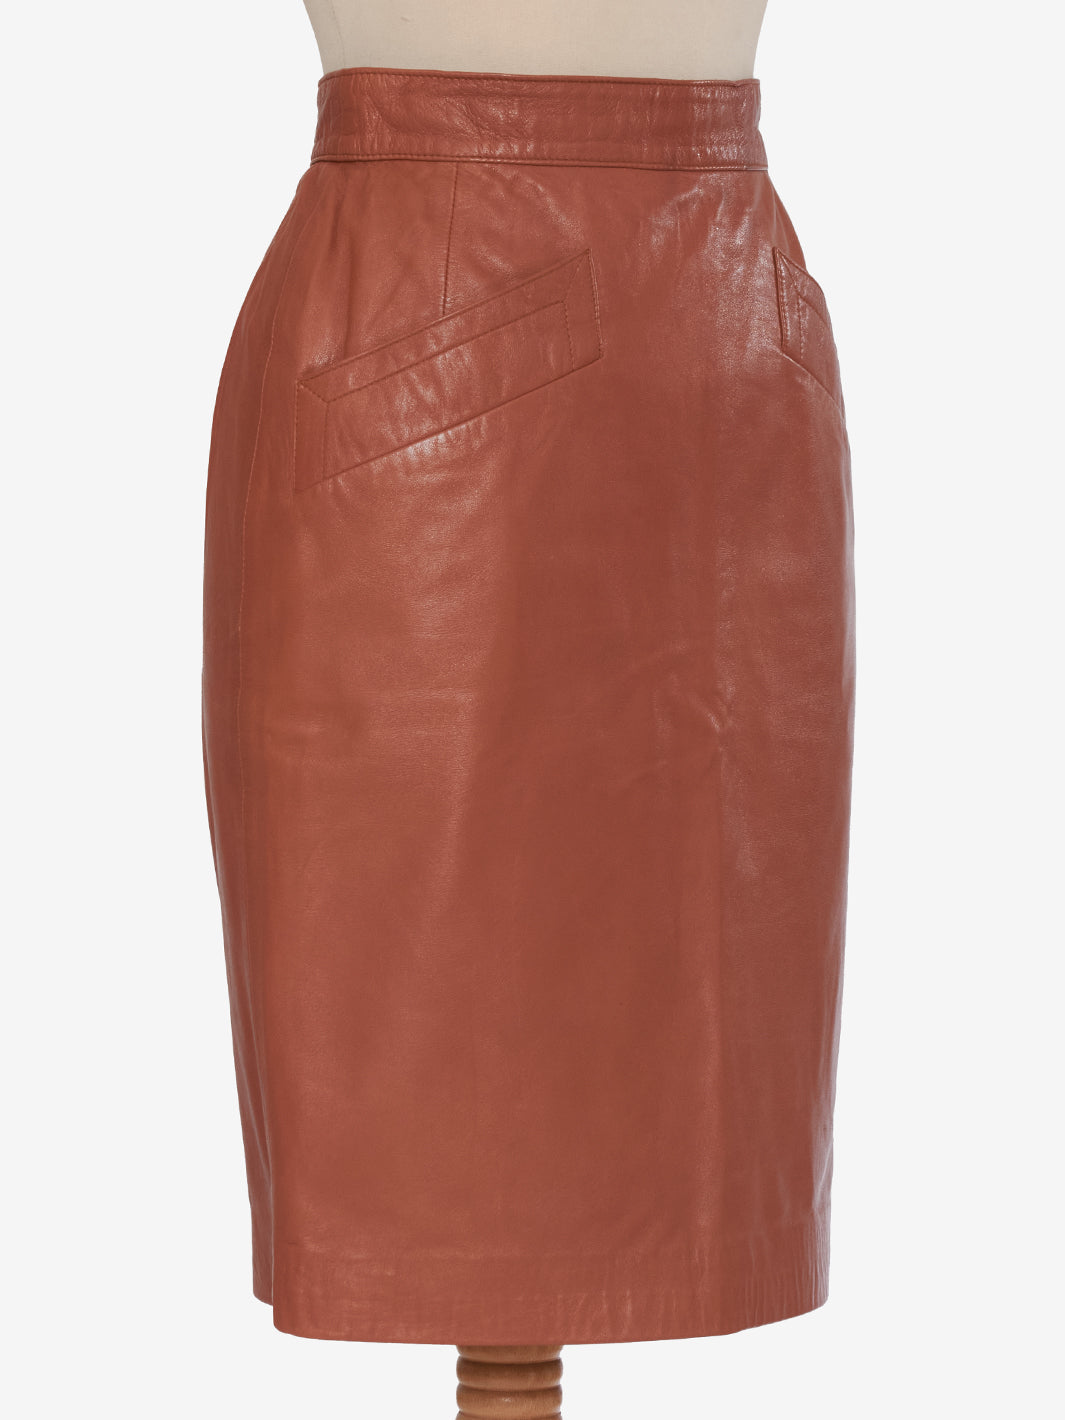 Brown Leather Vintage Skirt